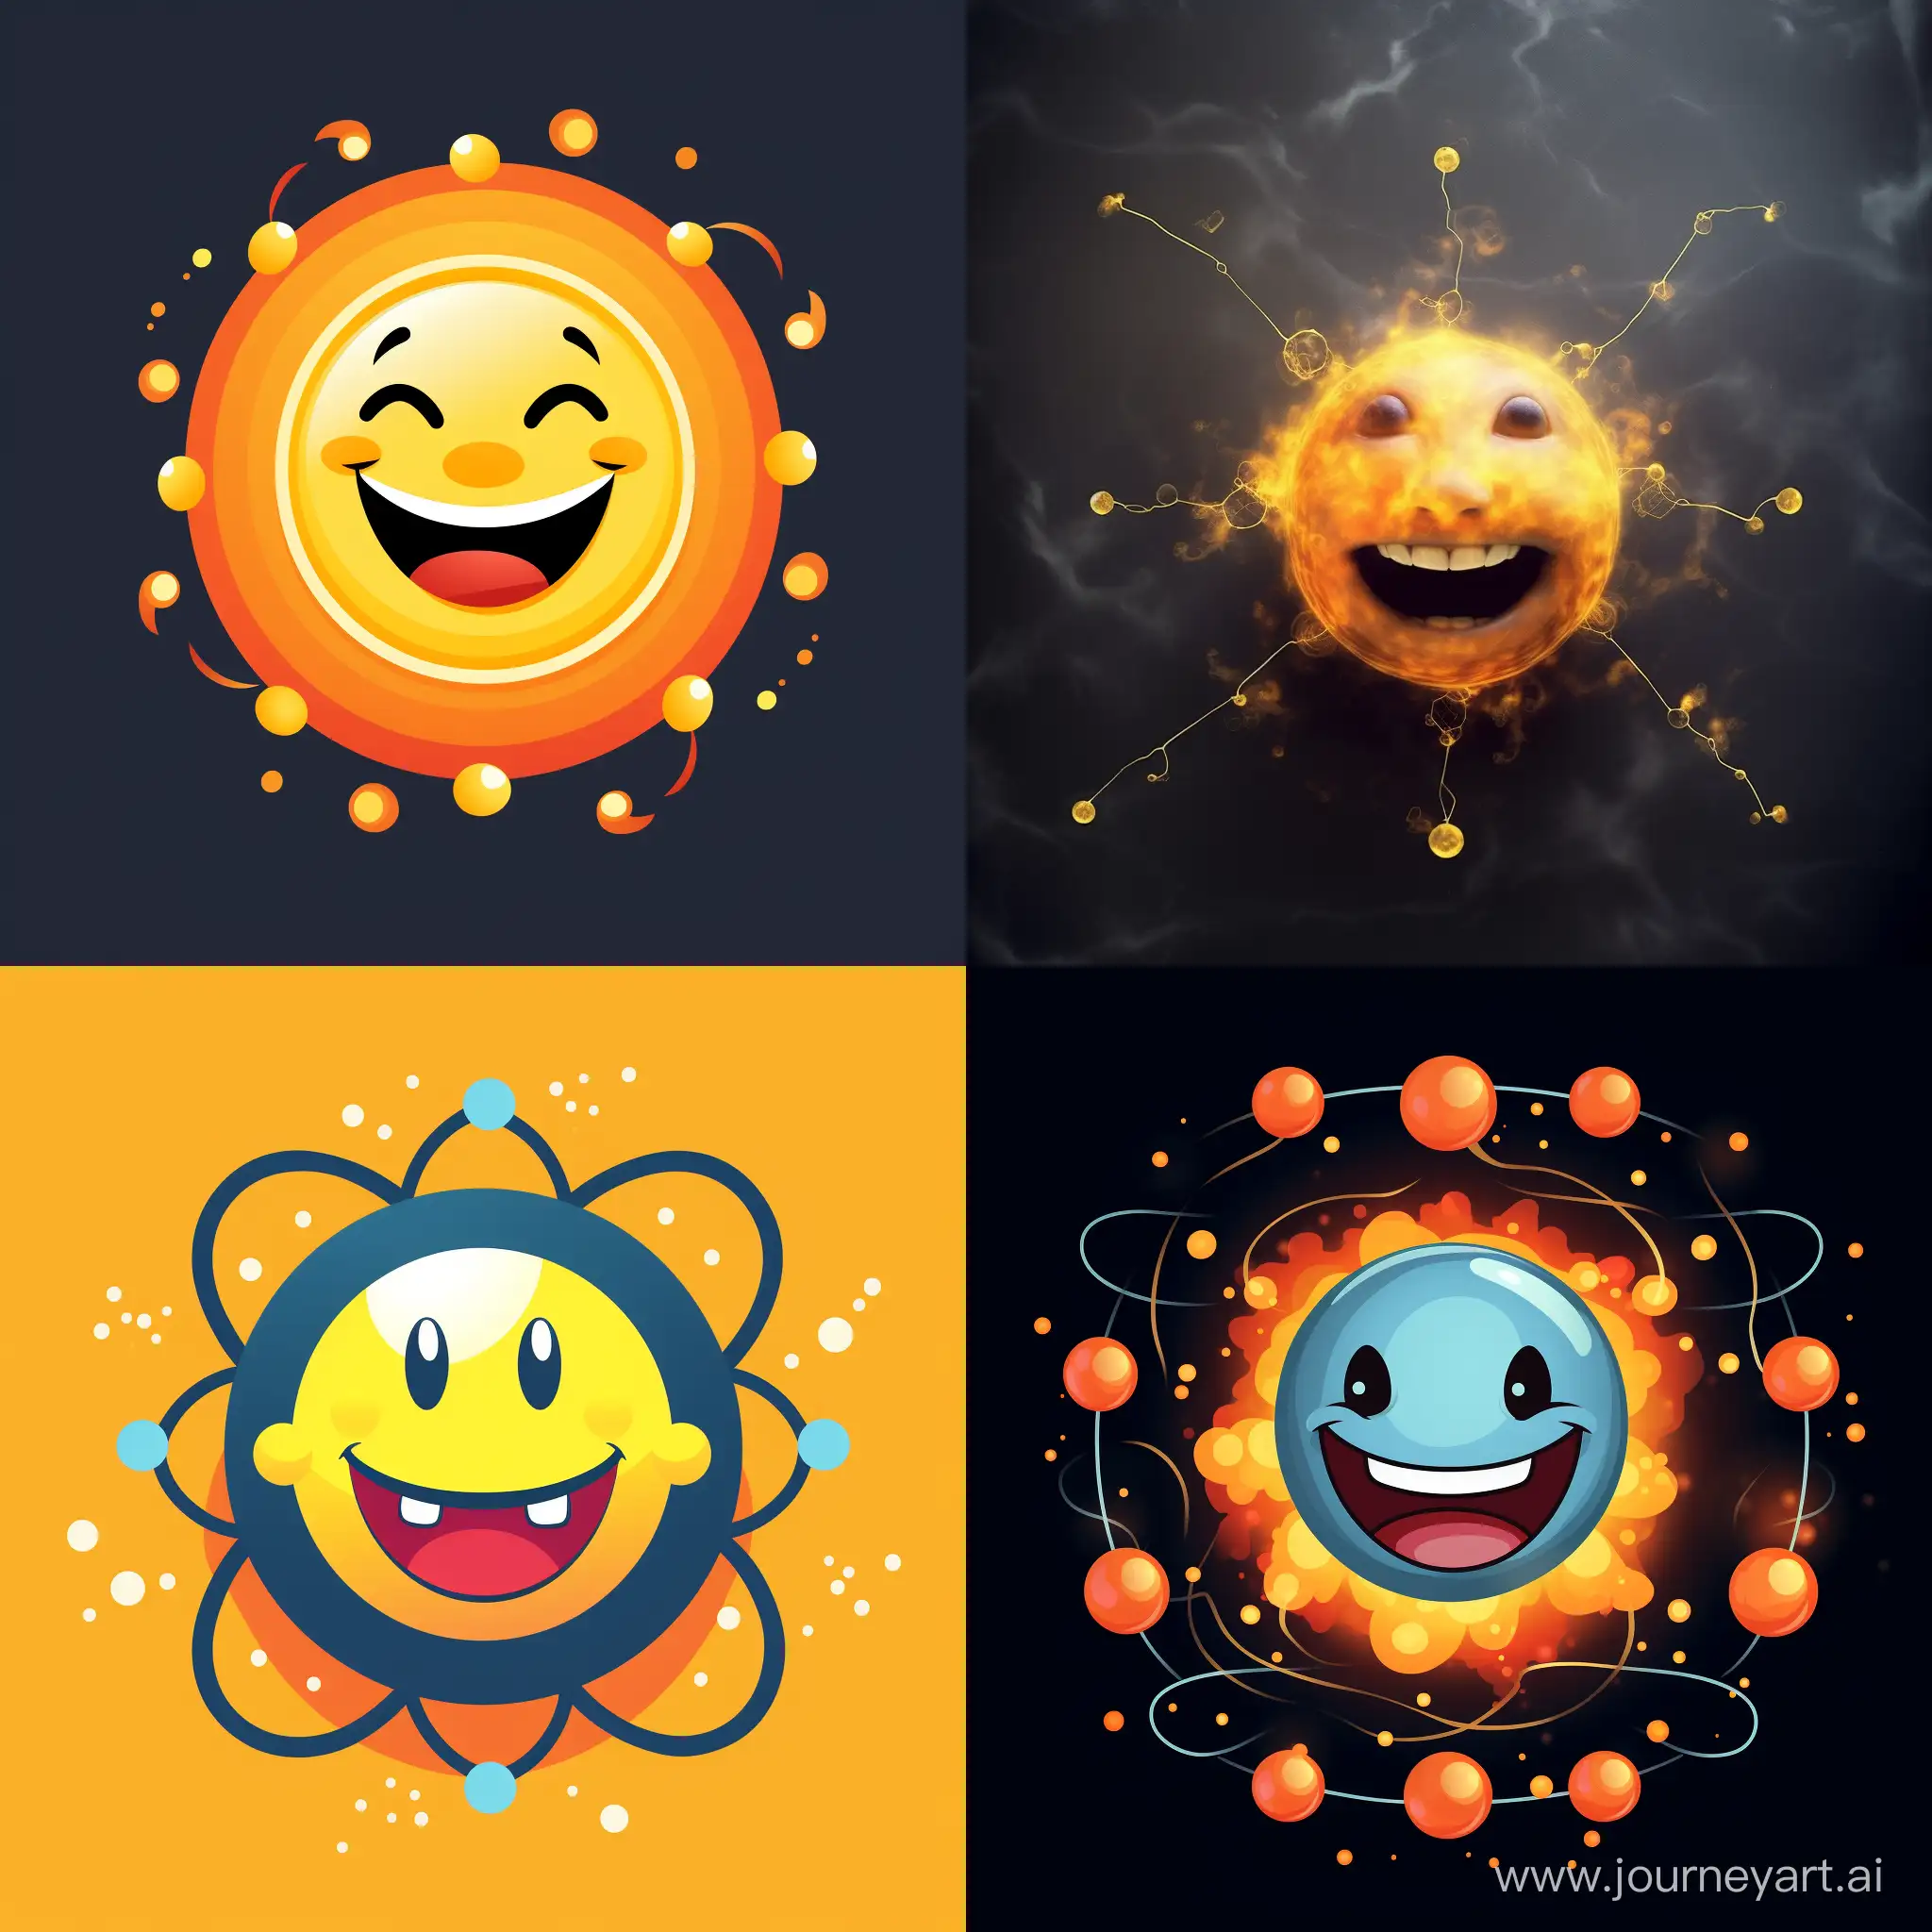 Cheerful-Hydrogen-Atom-Smiling